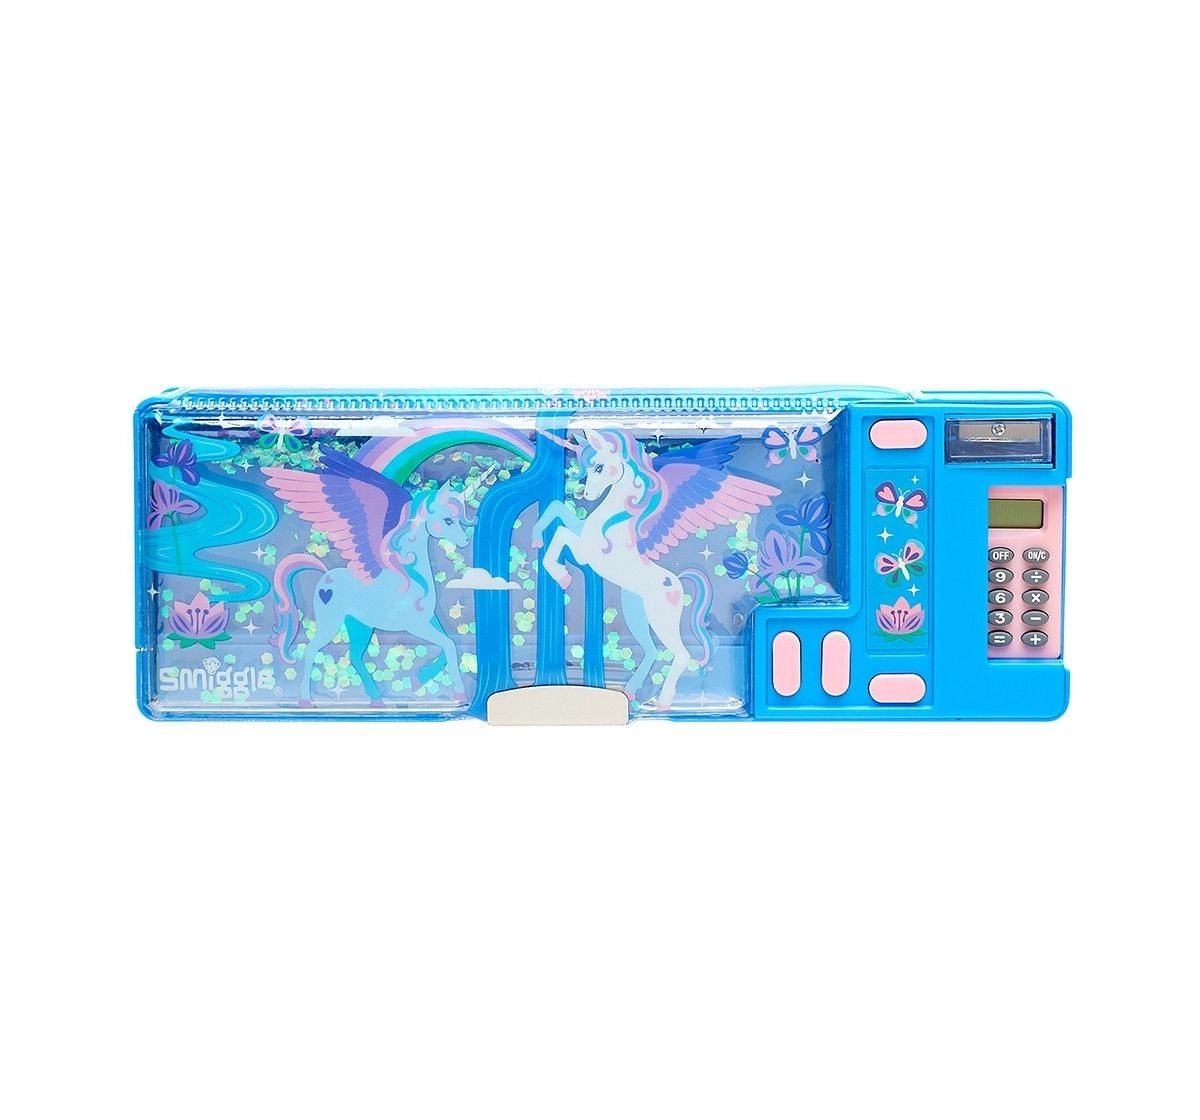  Smiggle Far Away Pop Out Pencil Case - Unicorn Print Bags for Kids age 6Y+ (Cornflower Blue)